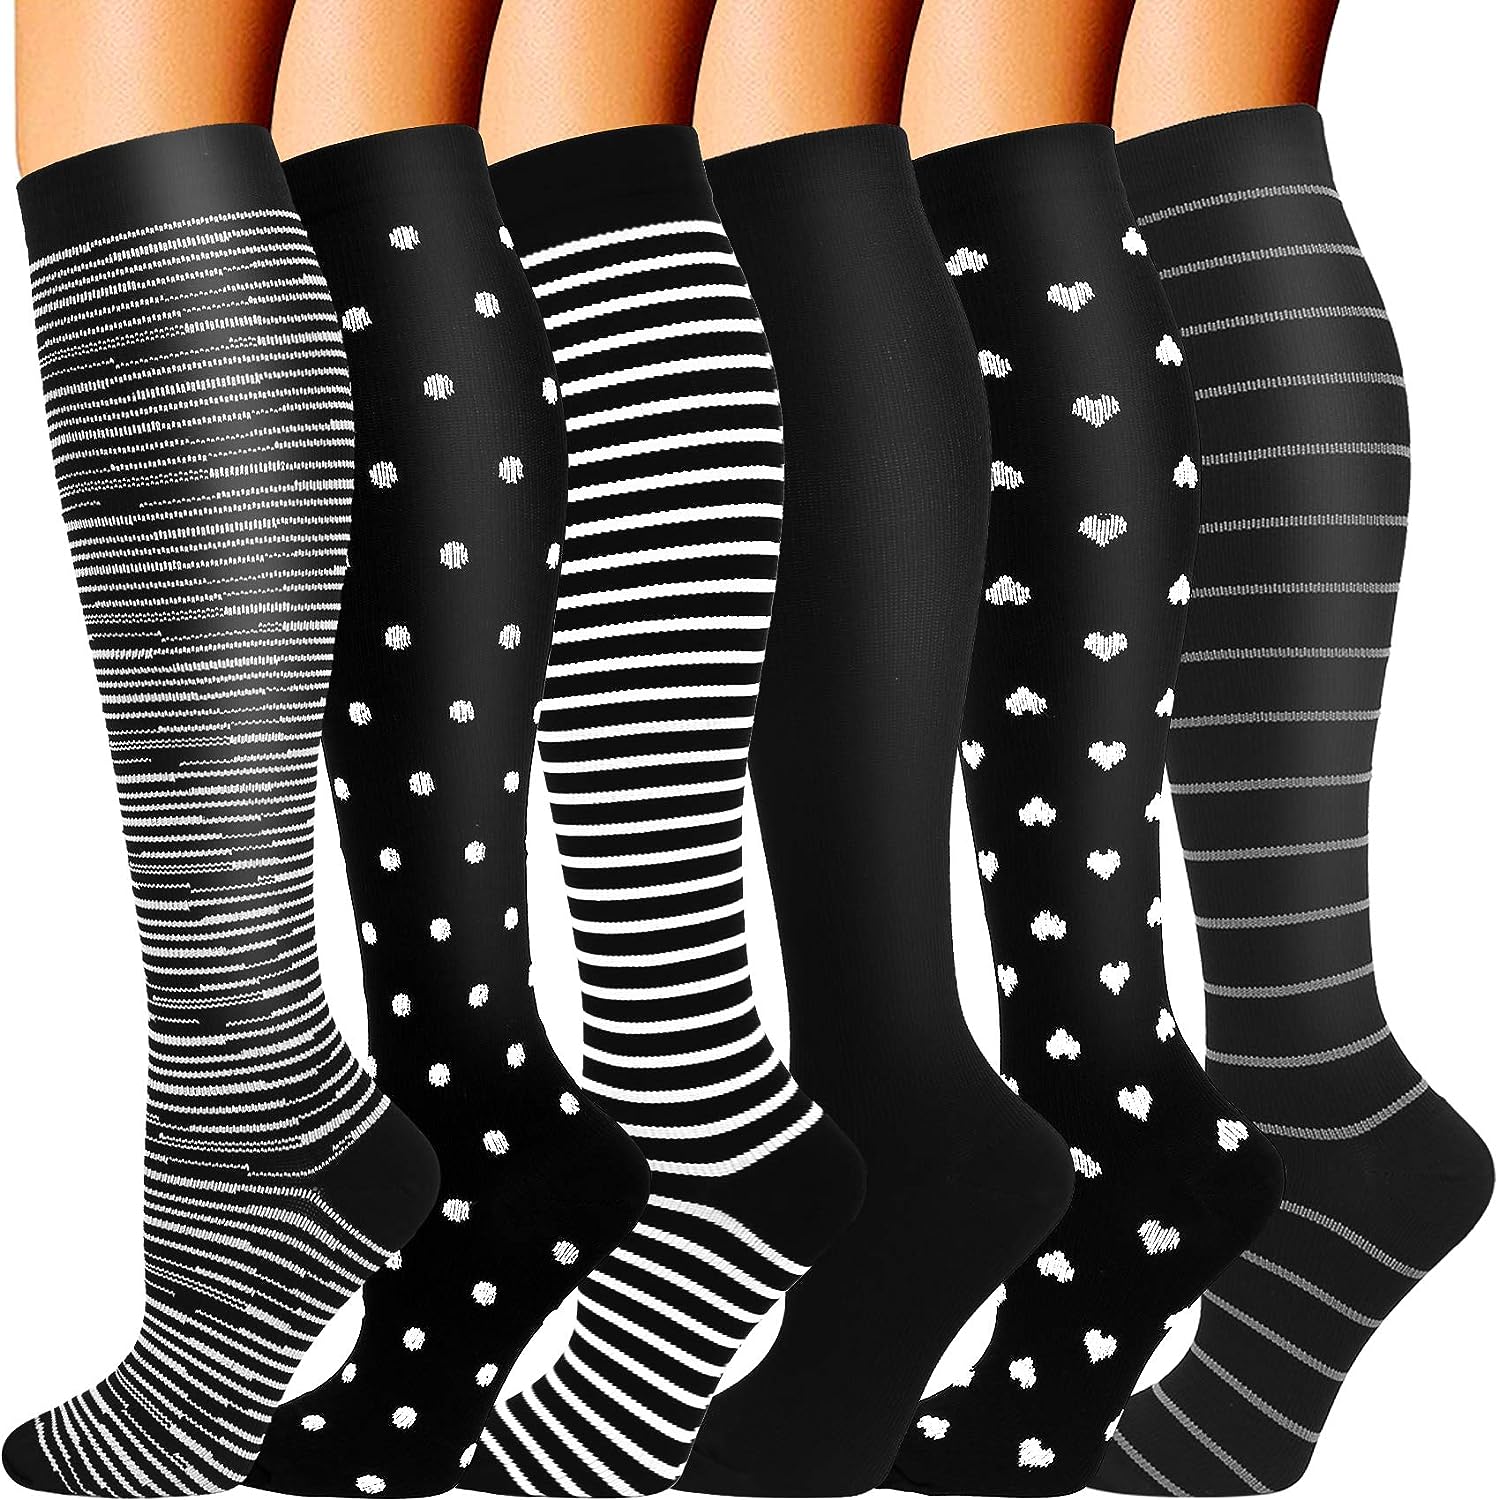 Double Couple 6 Pairs Compression Socks Women Men [...]